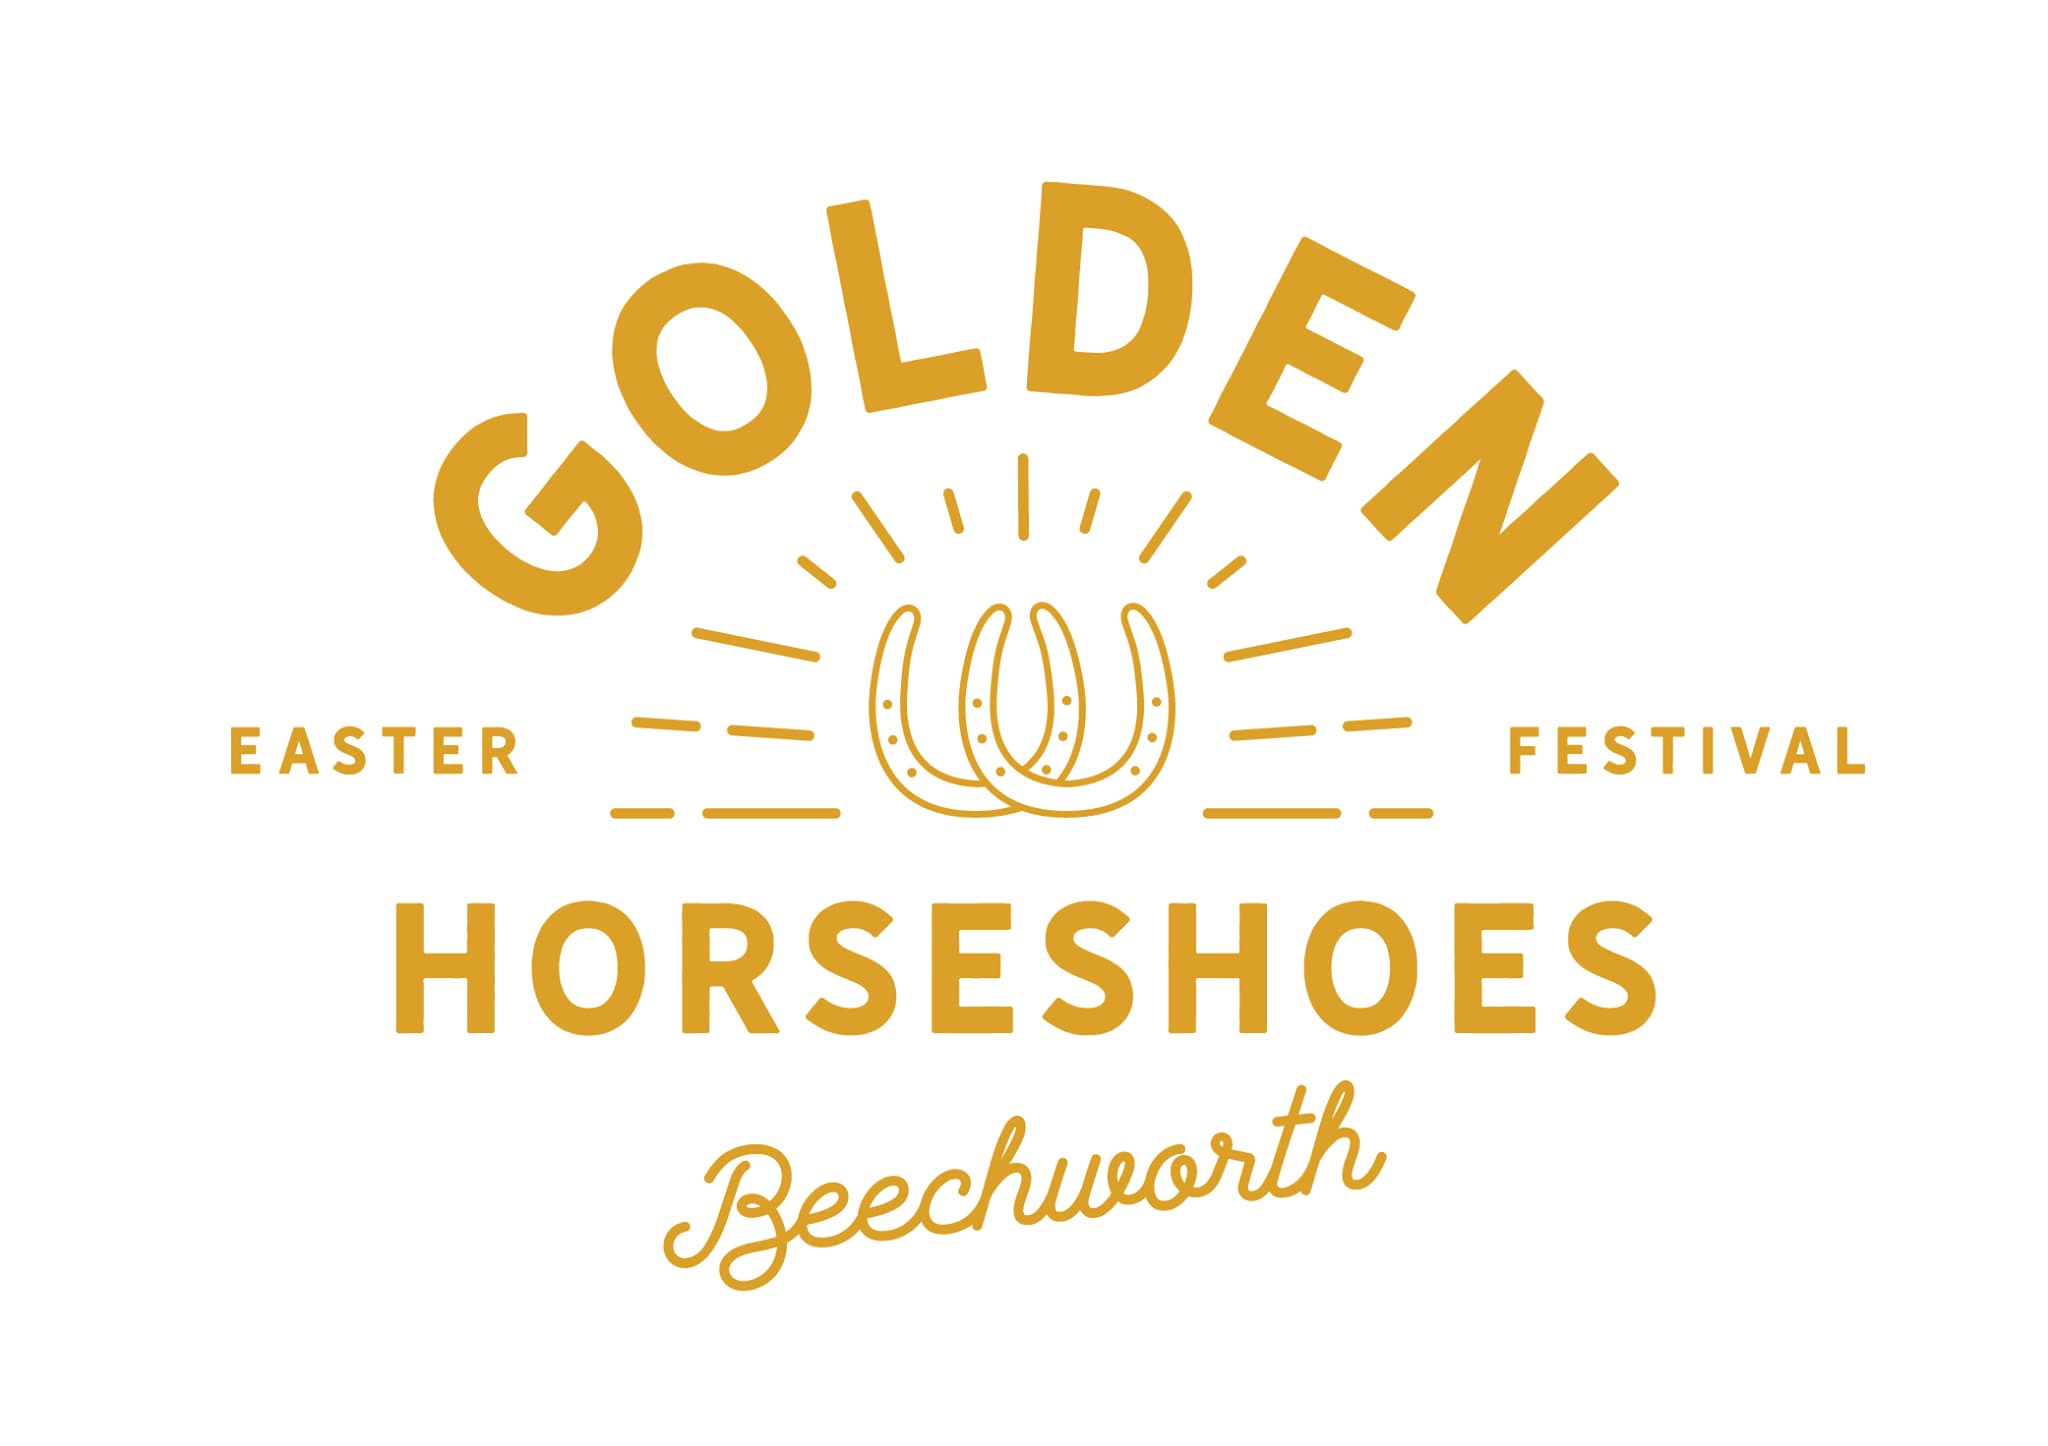 Beechworth Golden Horseshoes Festival